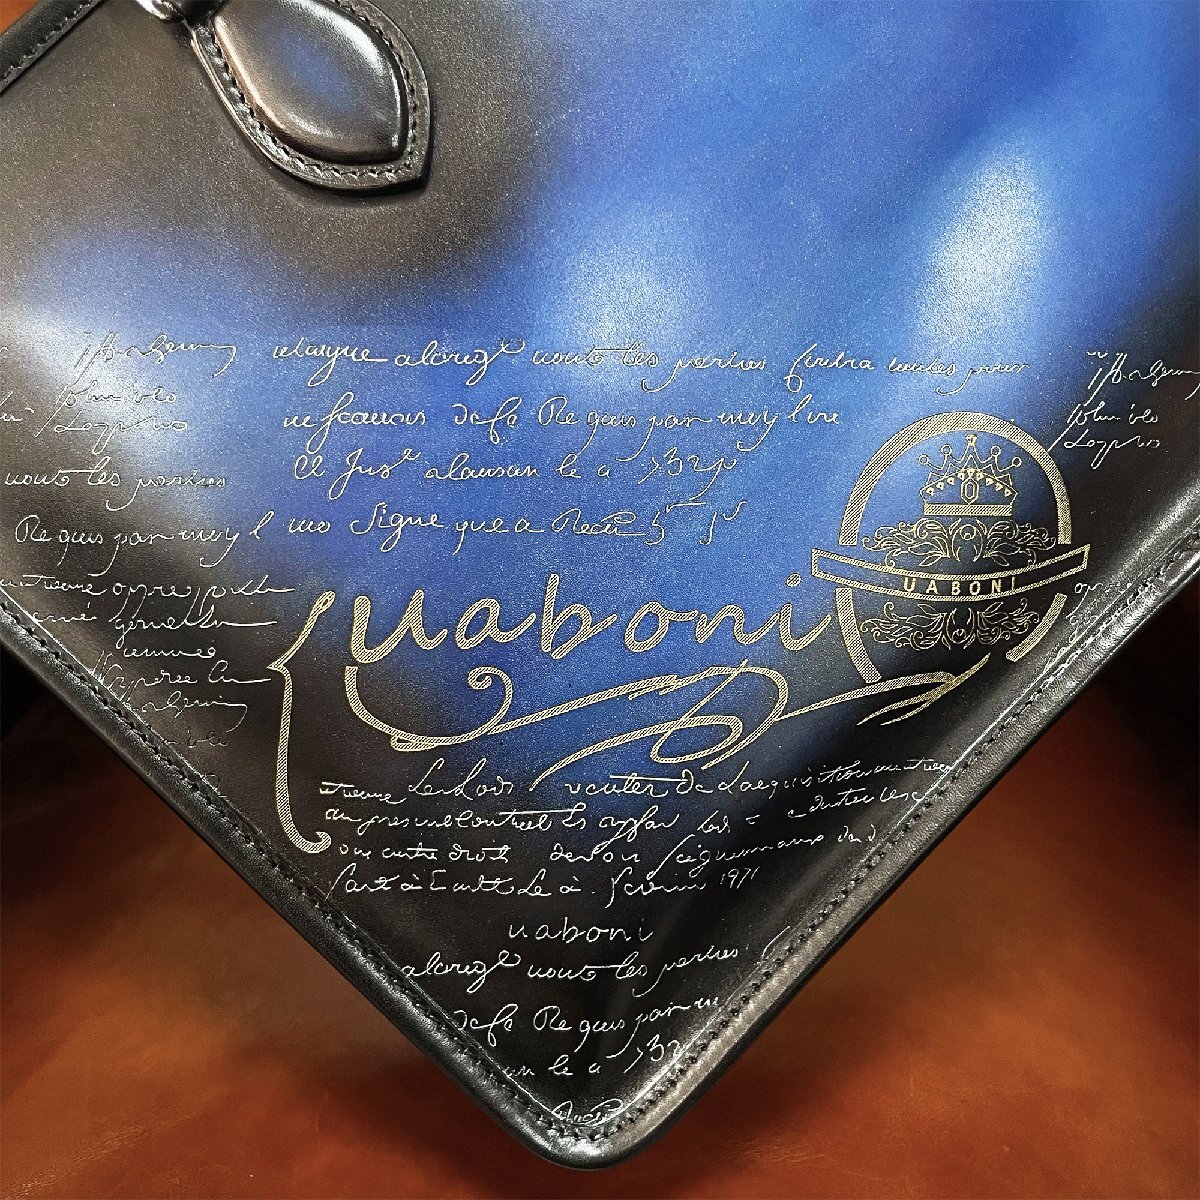  top class EU made regular price 38 ten thousand *UABONI*yuaboni* illusion. pa tea n* briefcase * business bag hand . bag tote bag original leather UN JOUR